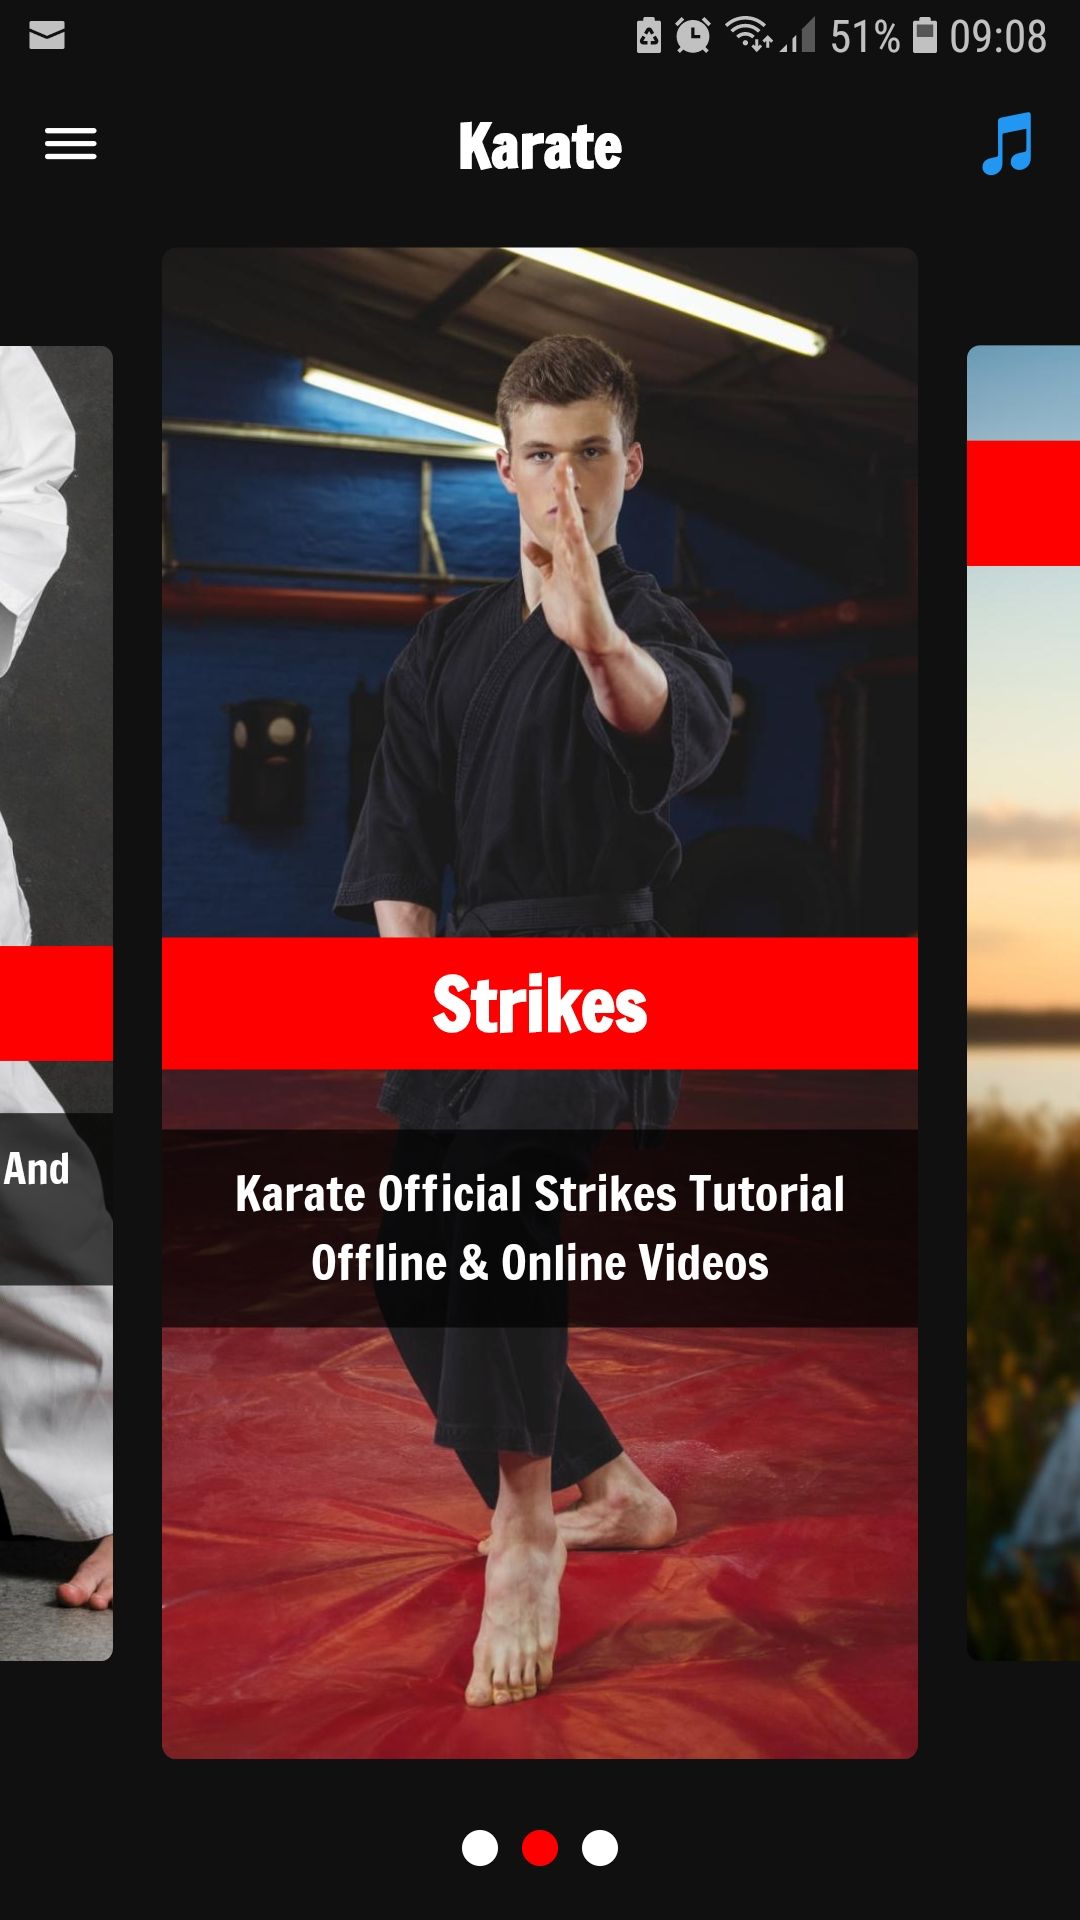 Karate Training home mobile app strikes